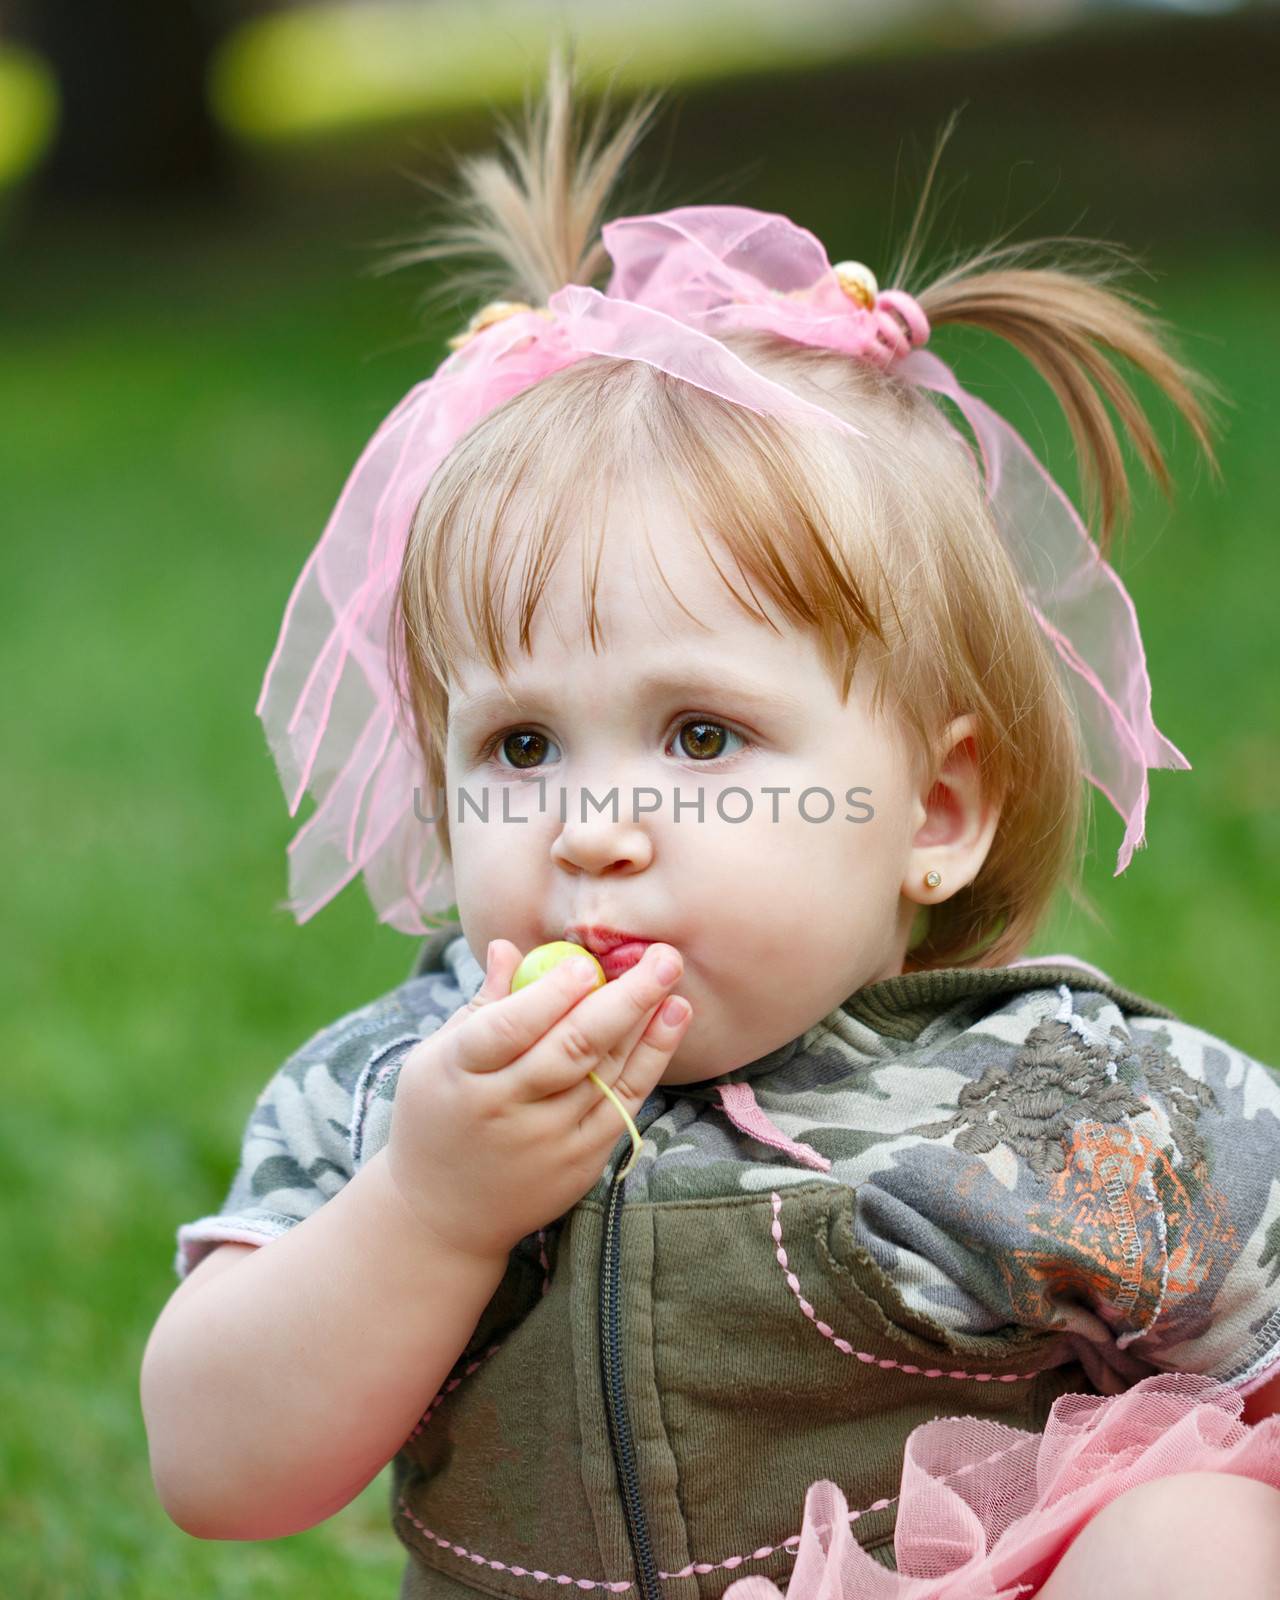 Girl eating an apple by Vagengeym